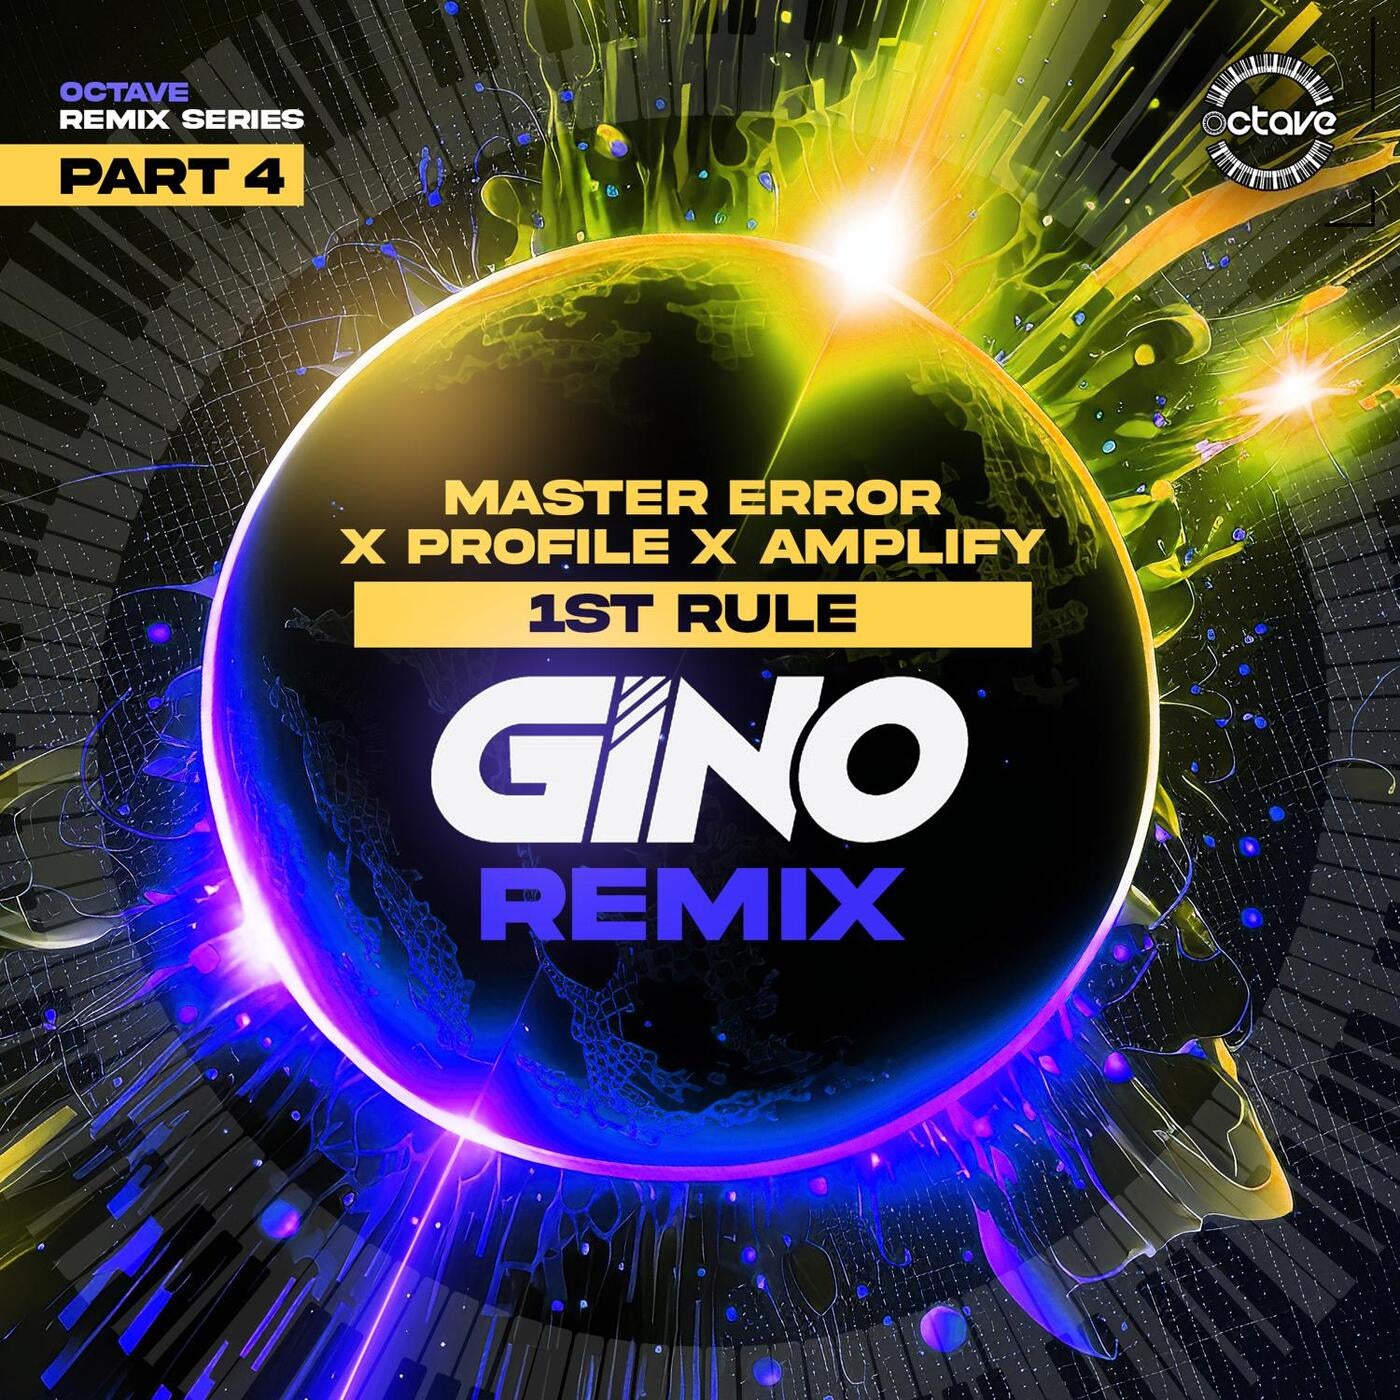 Cover - Amplify, Profile, Master Error - 1st Rule (Gino Remix)